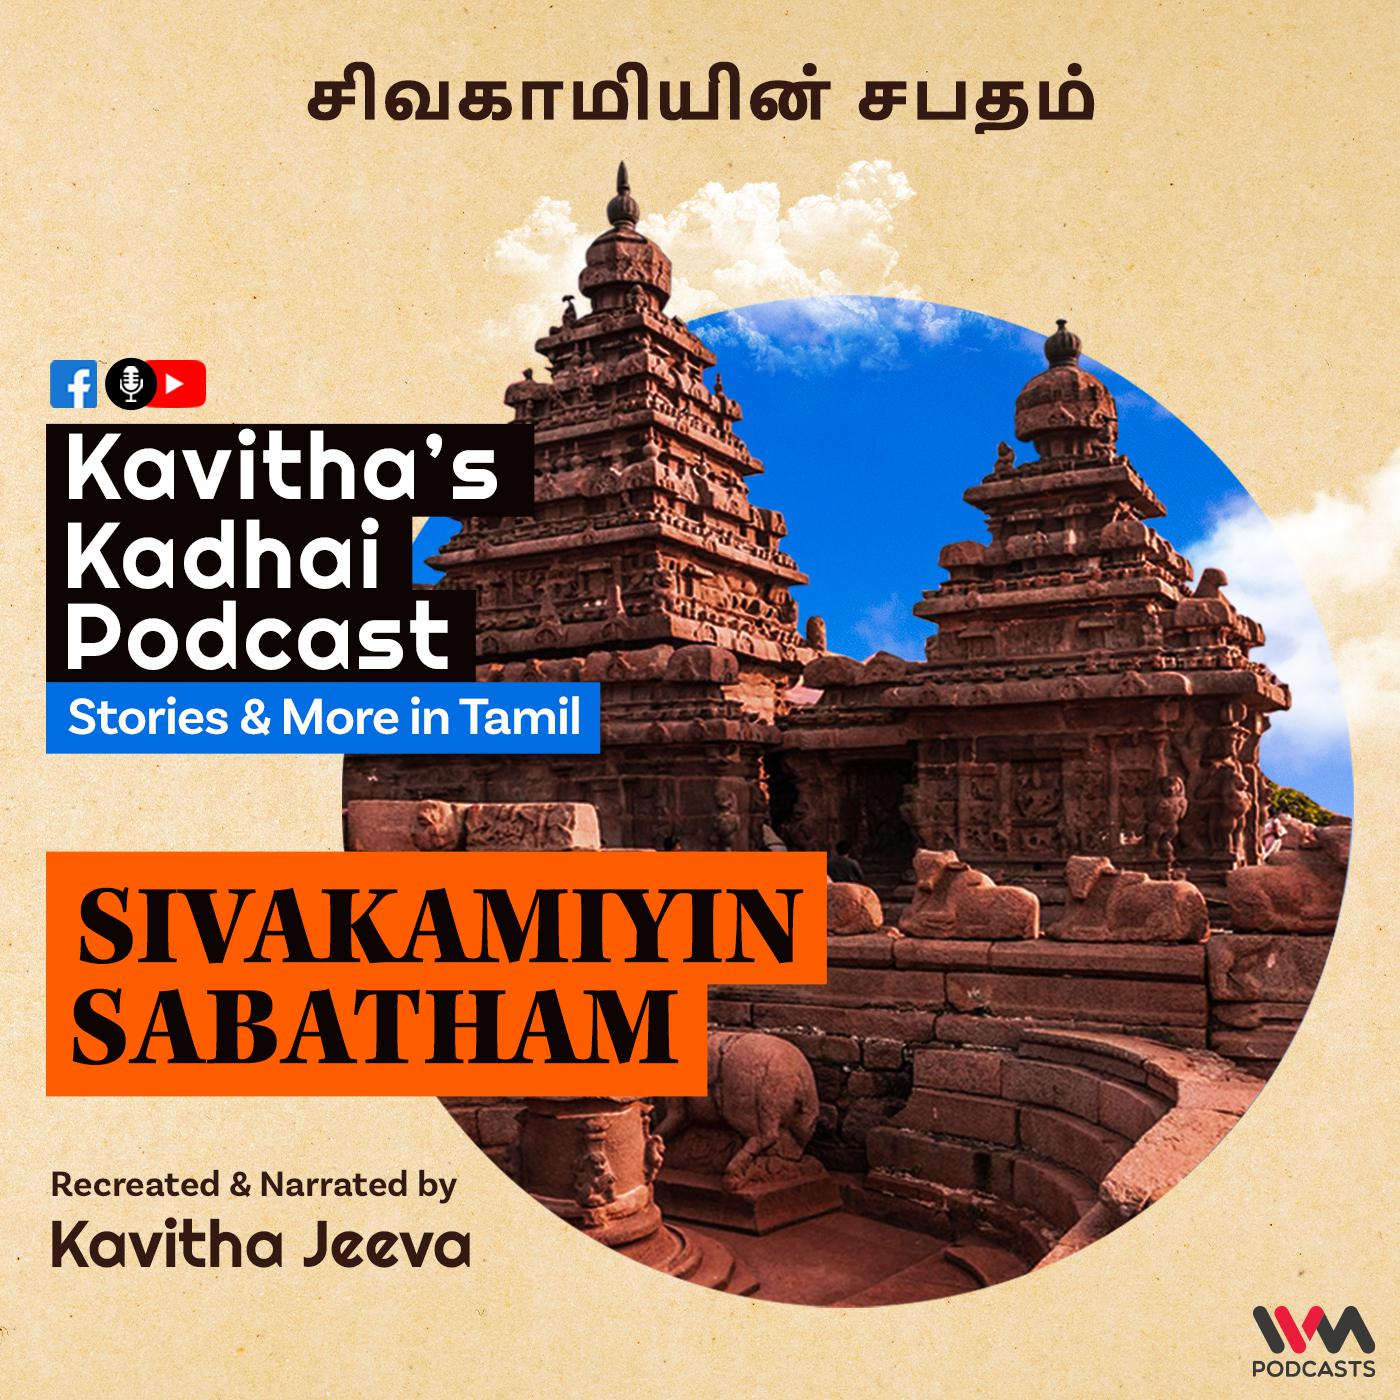 KadhaiPodcast’s Sivakamiyin Sabatham with Kavitha Jeeva - Episode #142